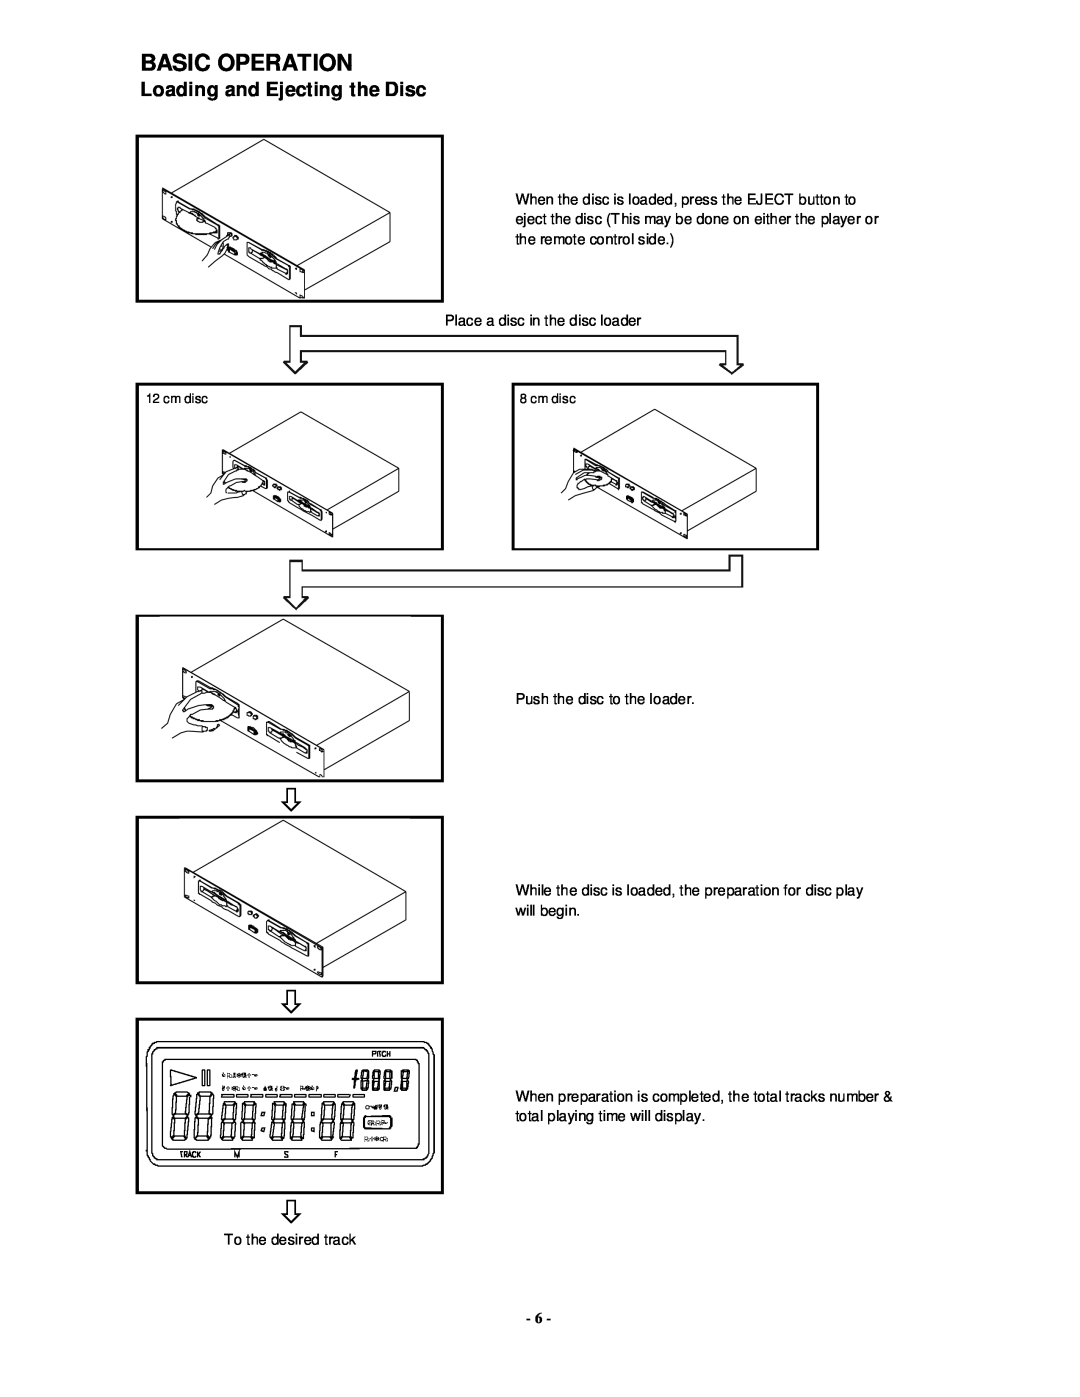 Radio Shack PDCD810 manual Basic Operation, Loading and Ejecting the Disc 